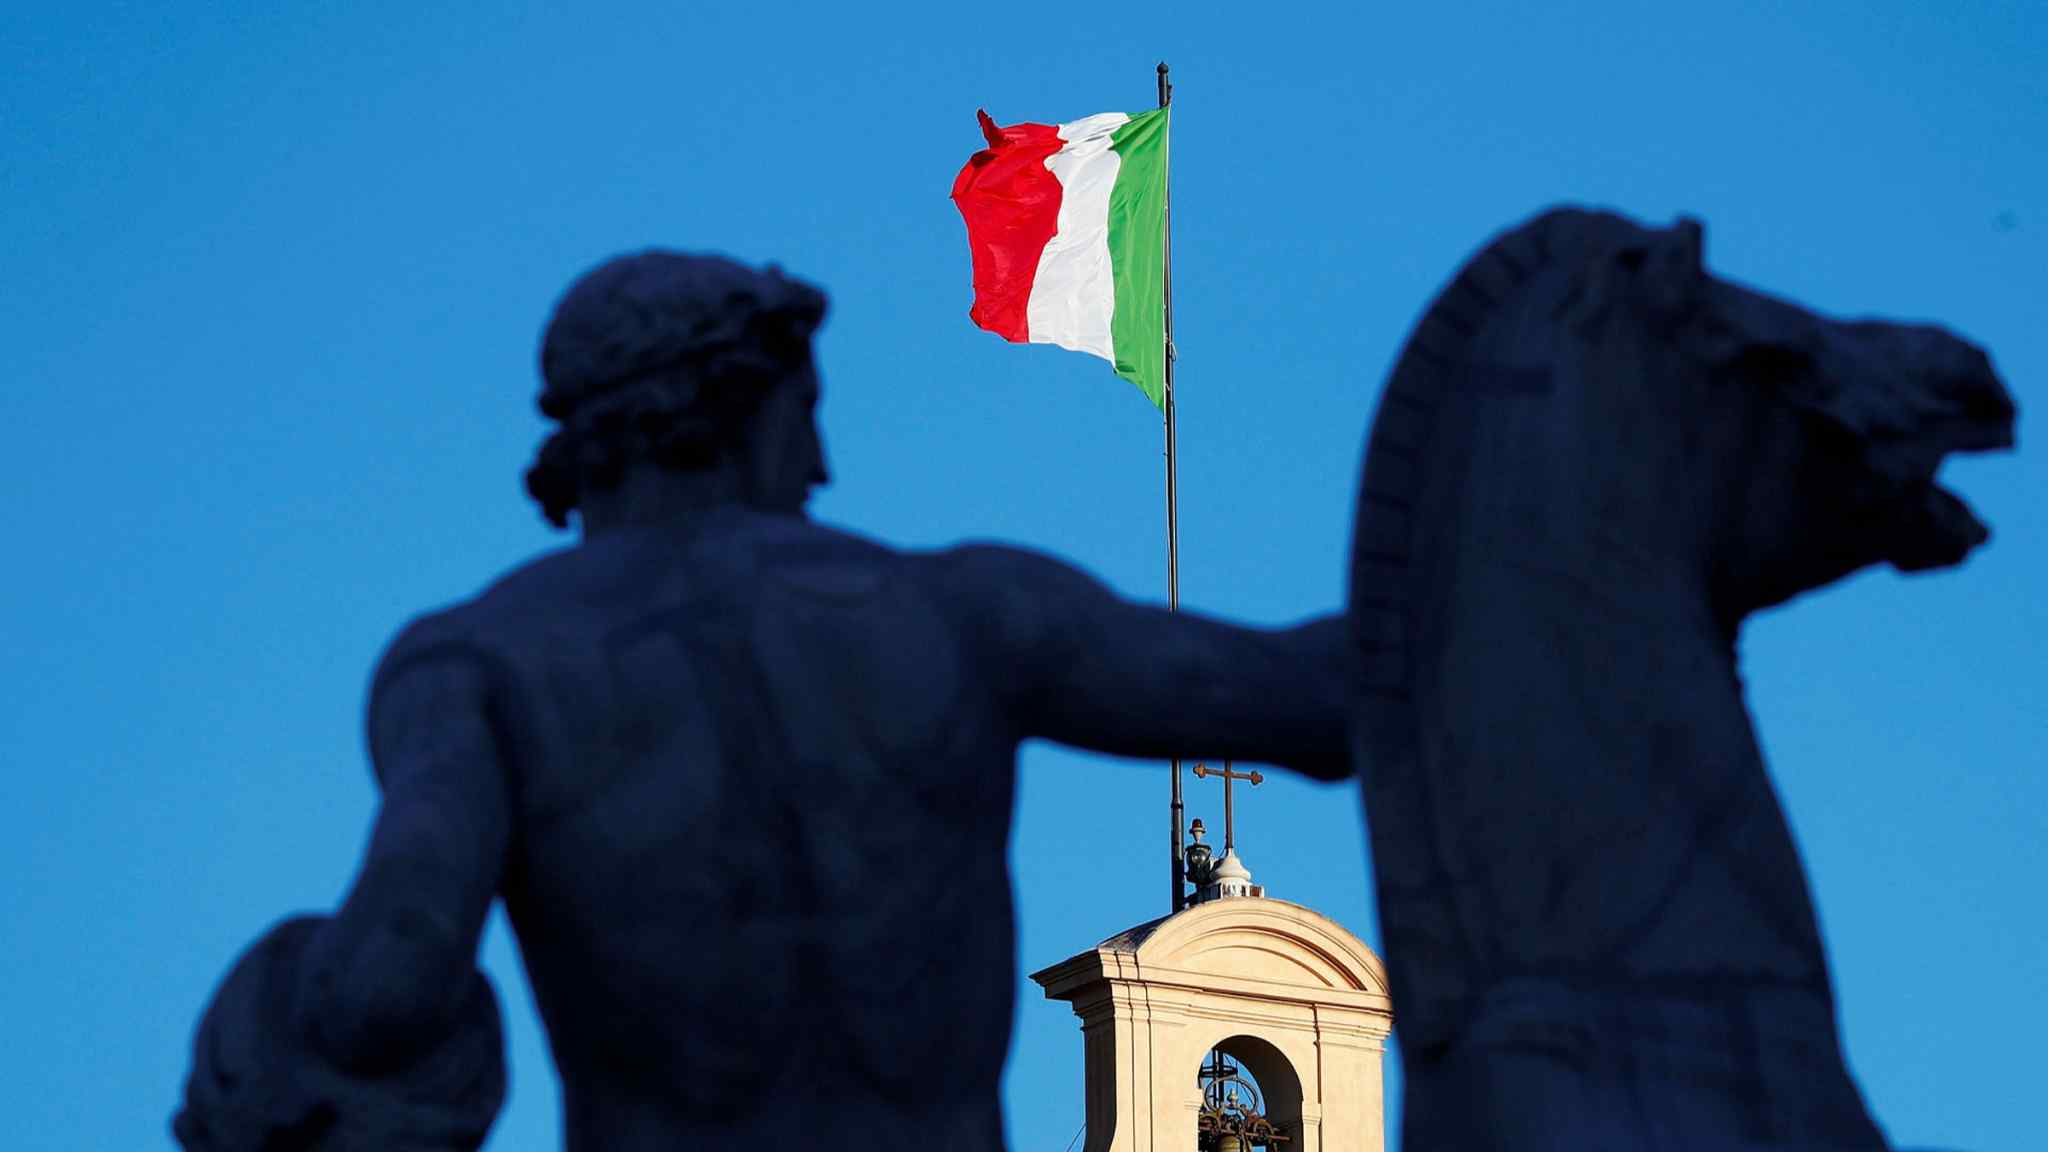 Live: Investors dump Italian government bonds as political turmoil grows